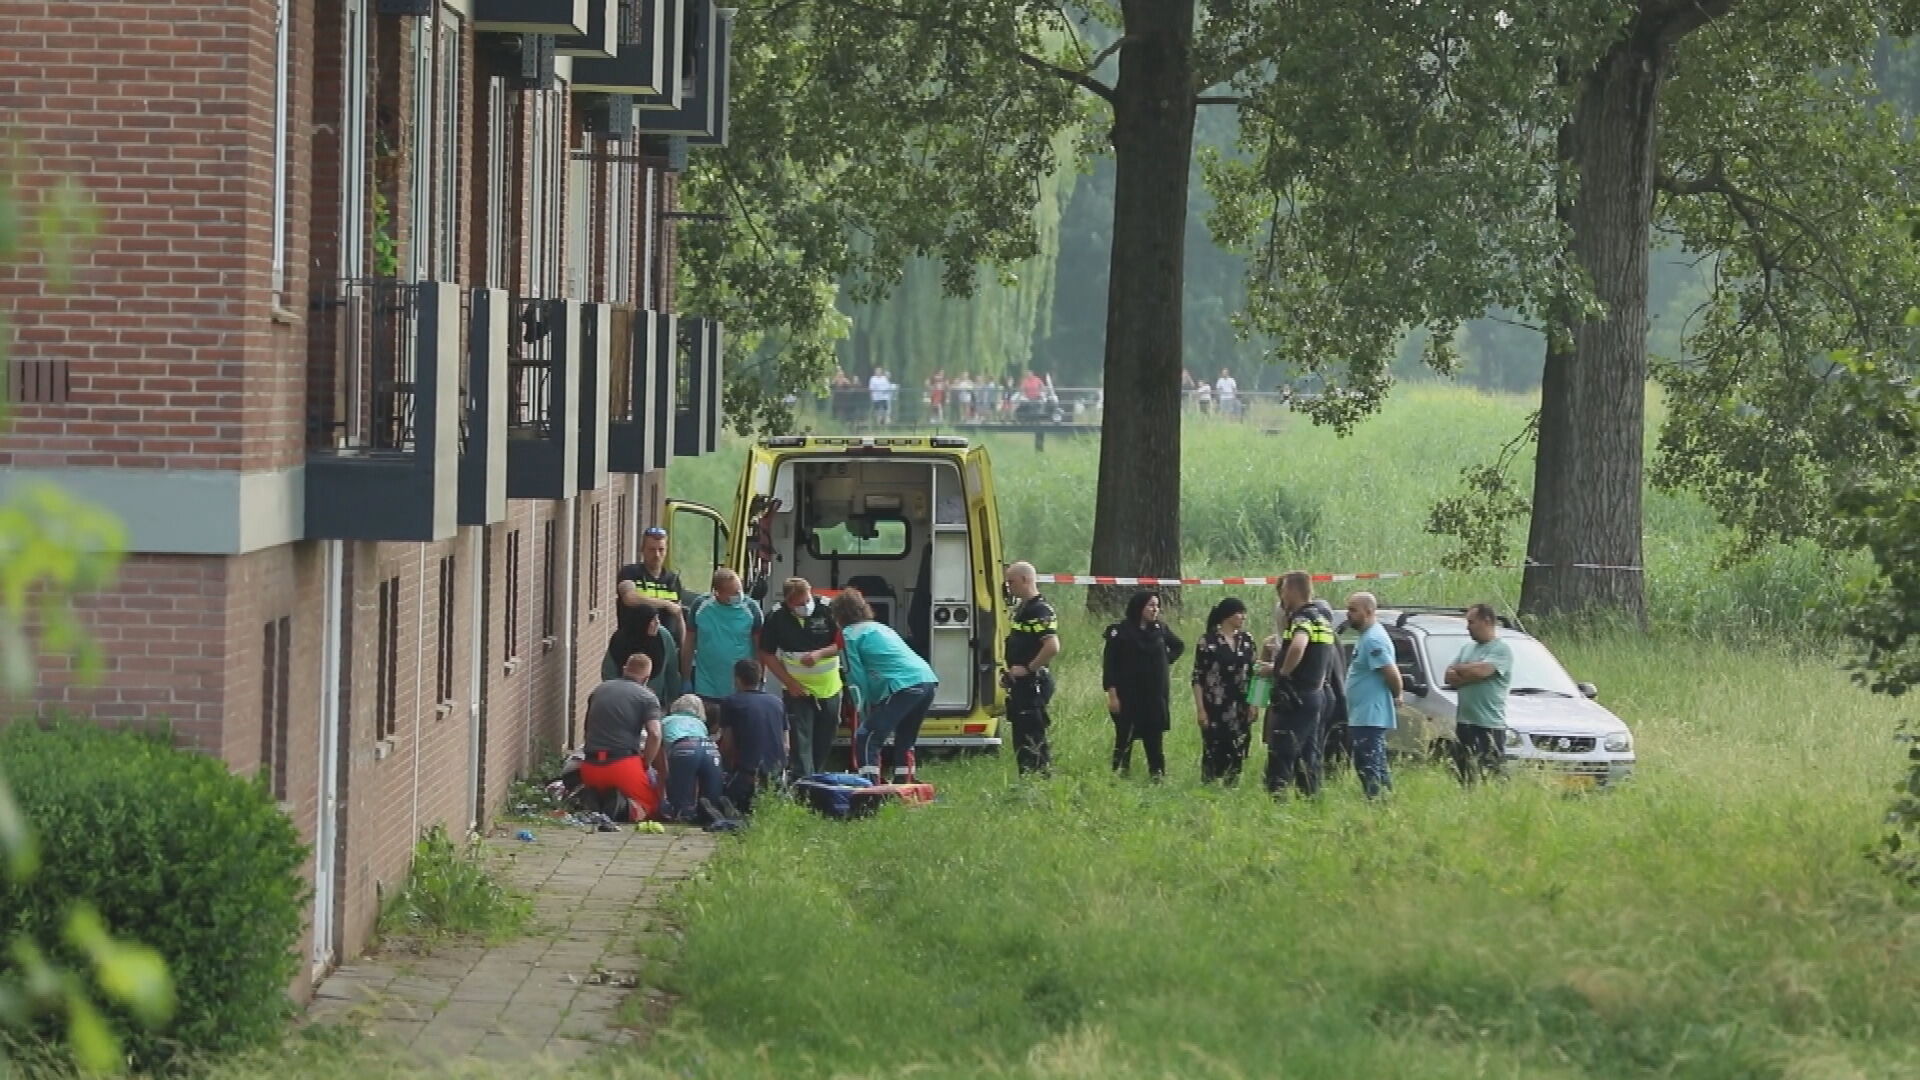 Inspecteur evenaar browser Jong kind ernstig gewond na val van drie hoog uit raam van flat in Arnhem |  Hart van Nederland